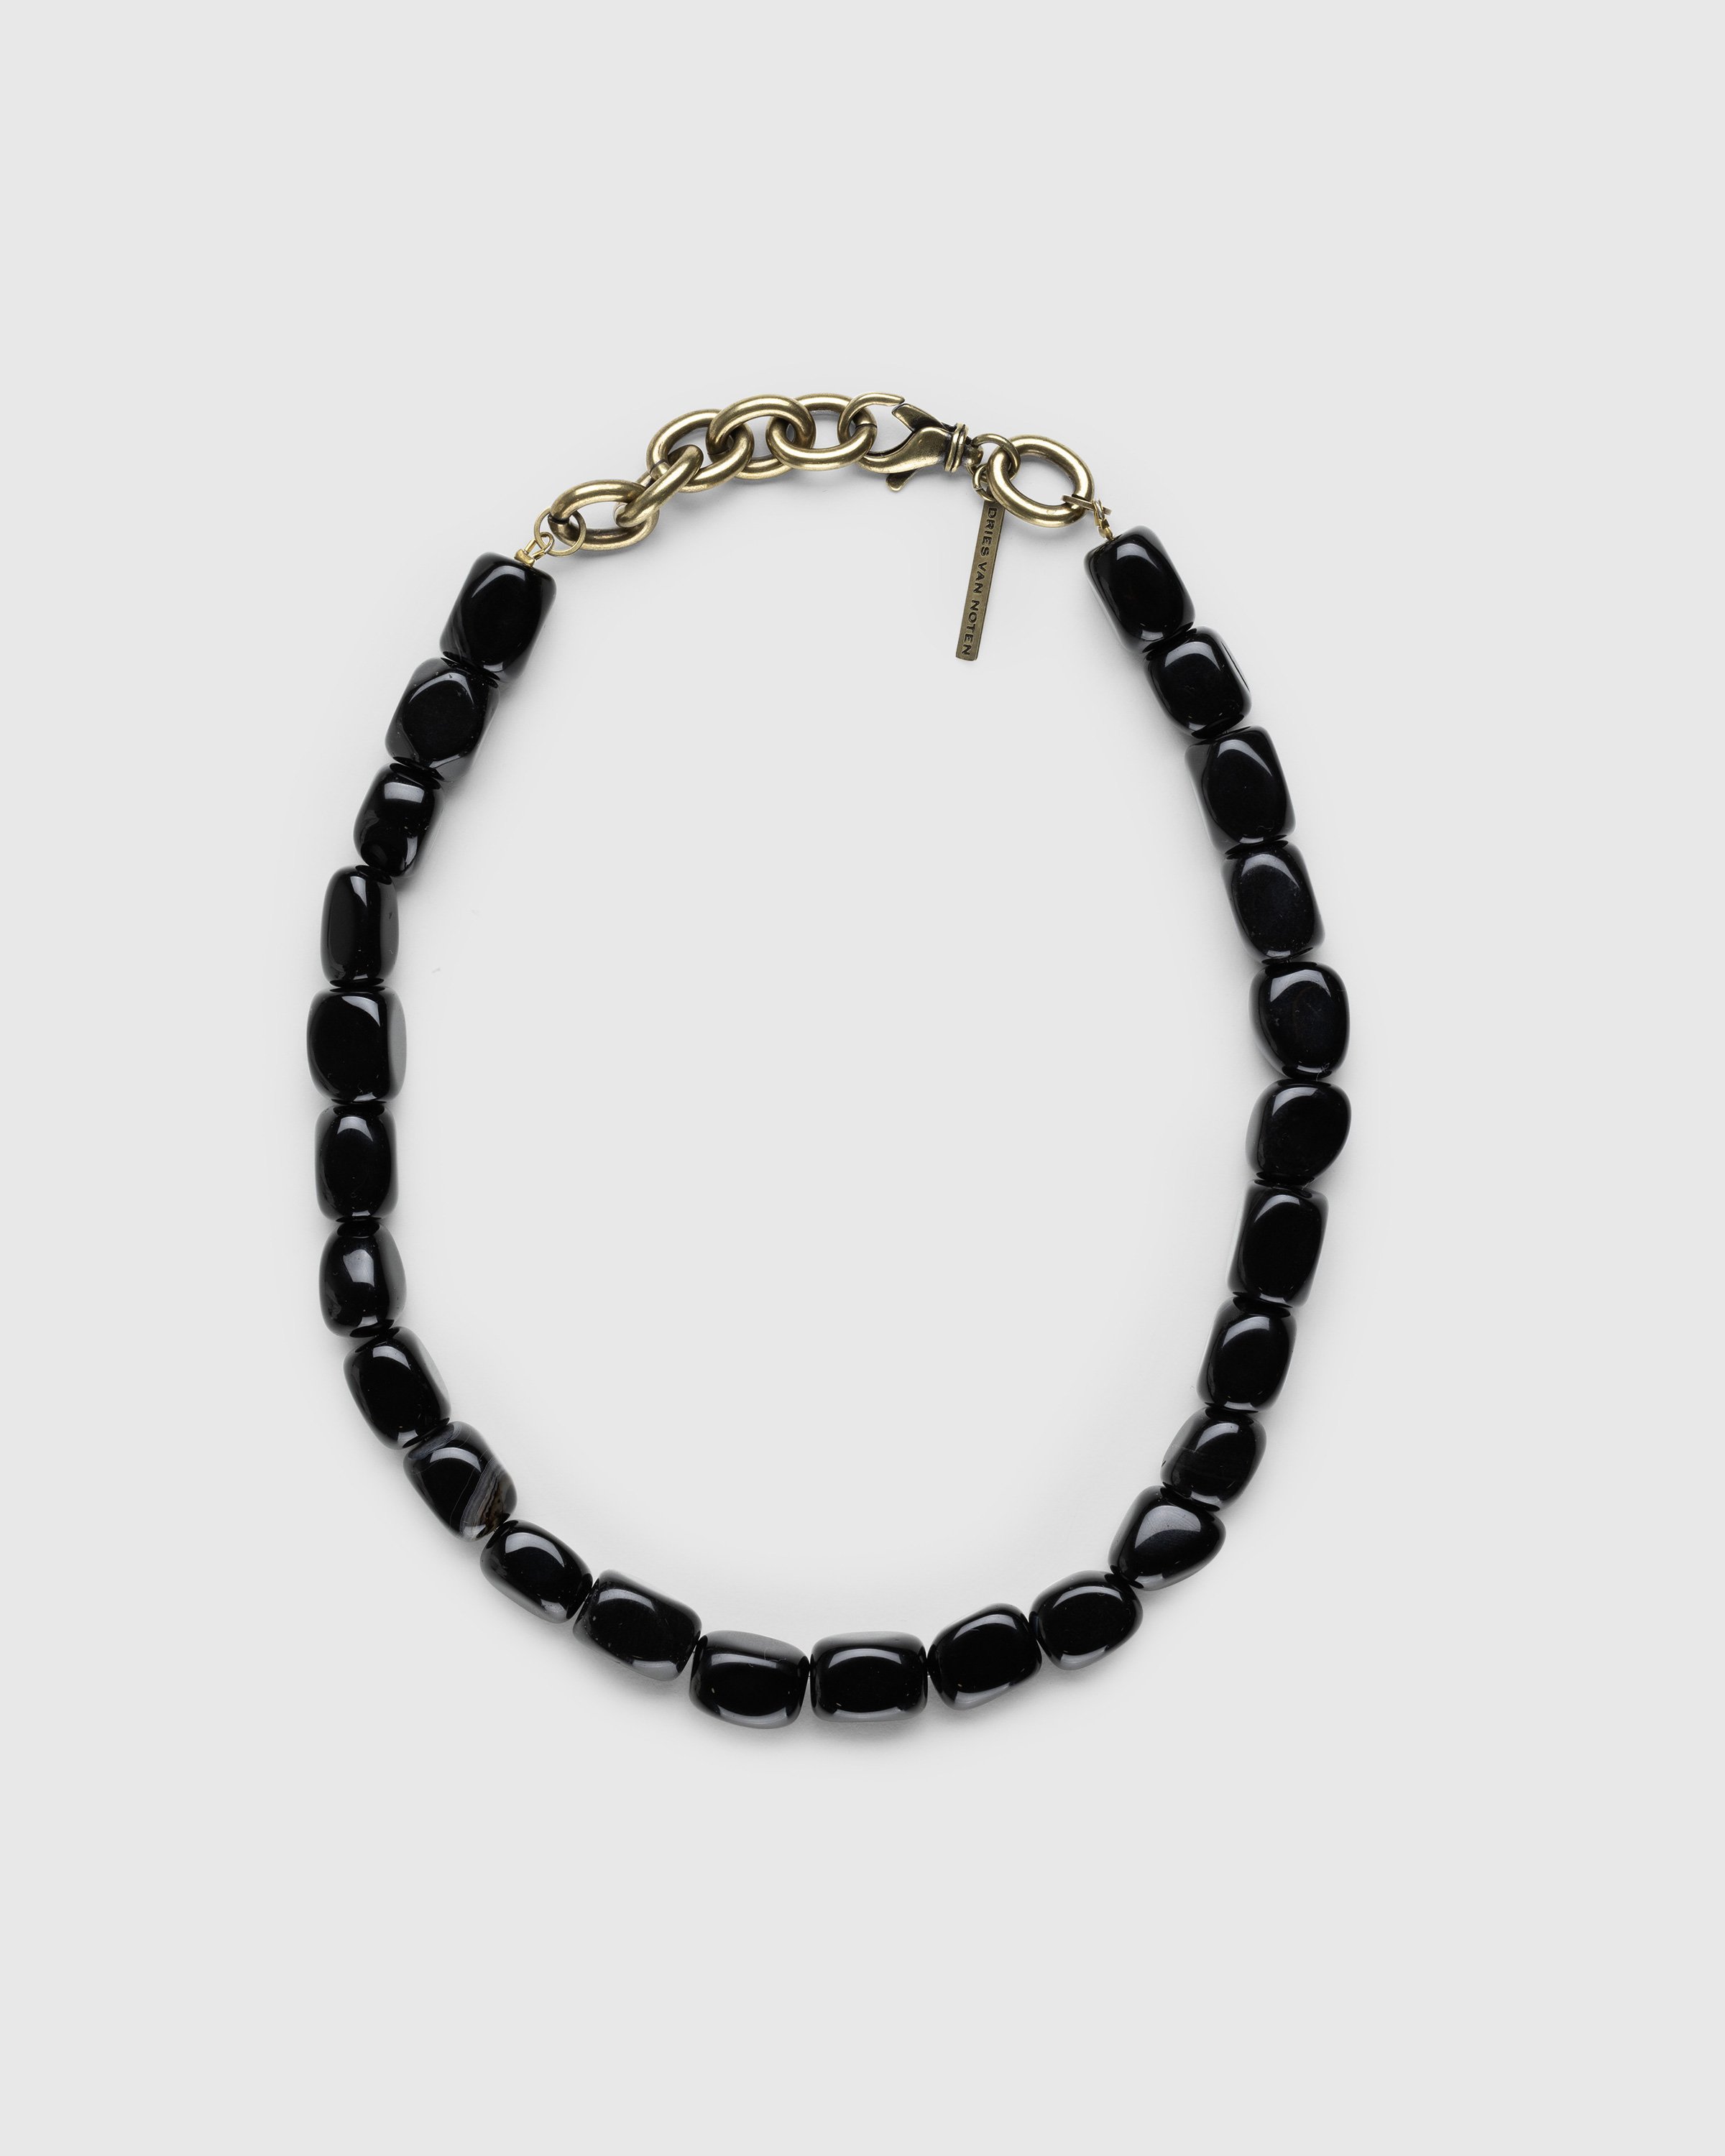 Dries van Noten - M232-206 Necklace Black - Accessories - Black - Image 1